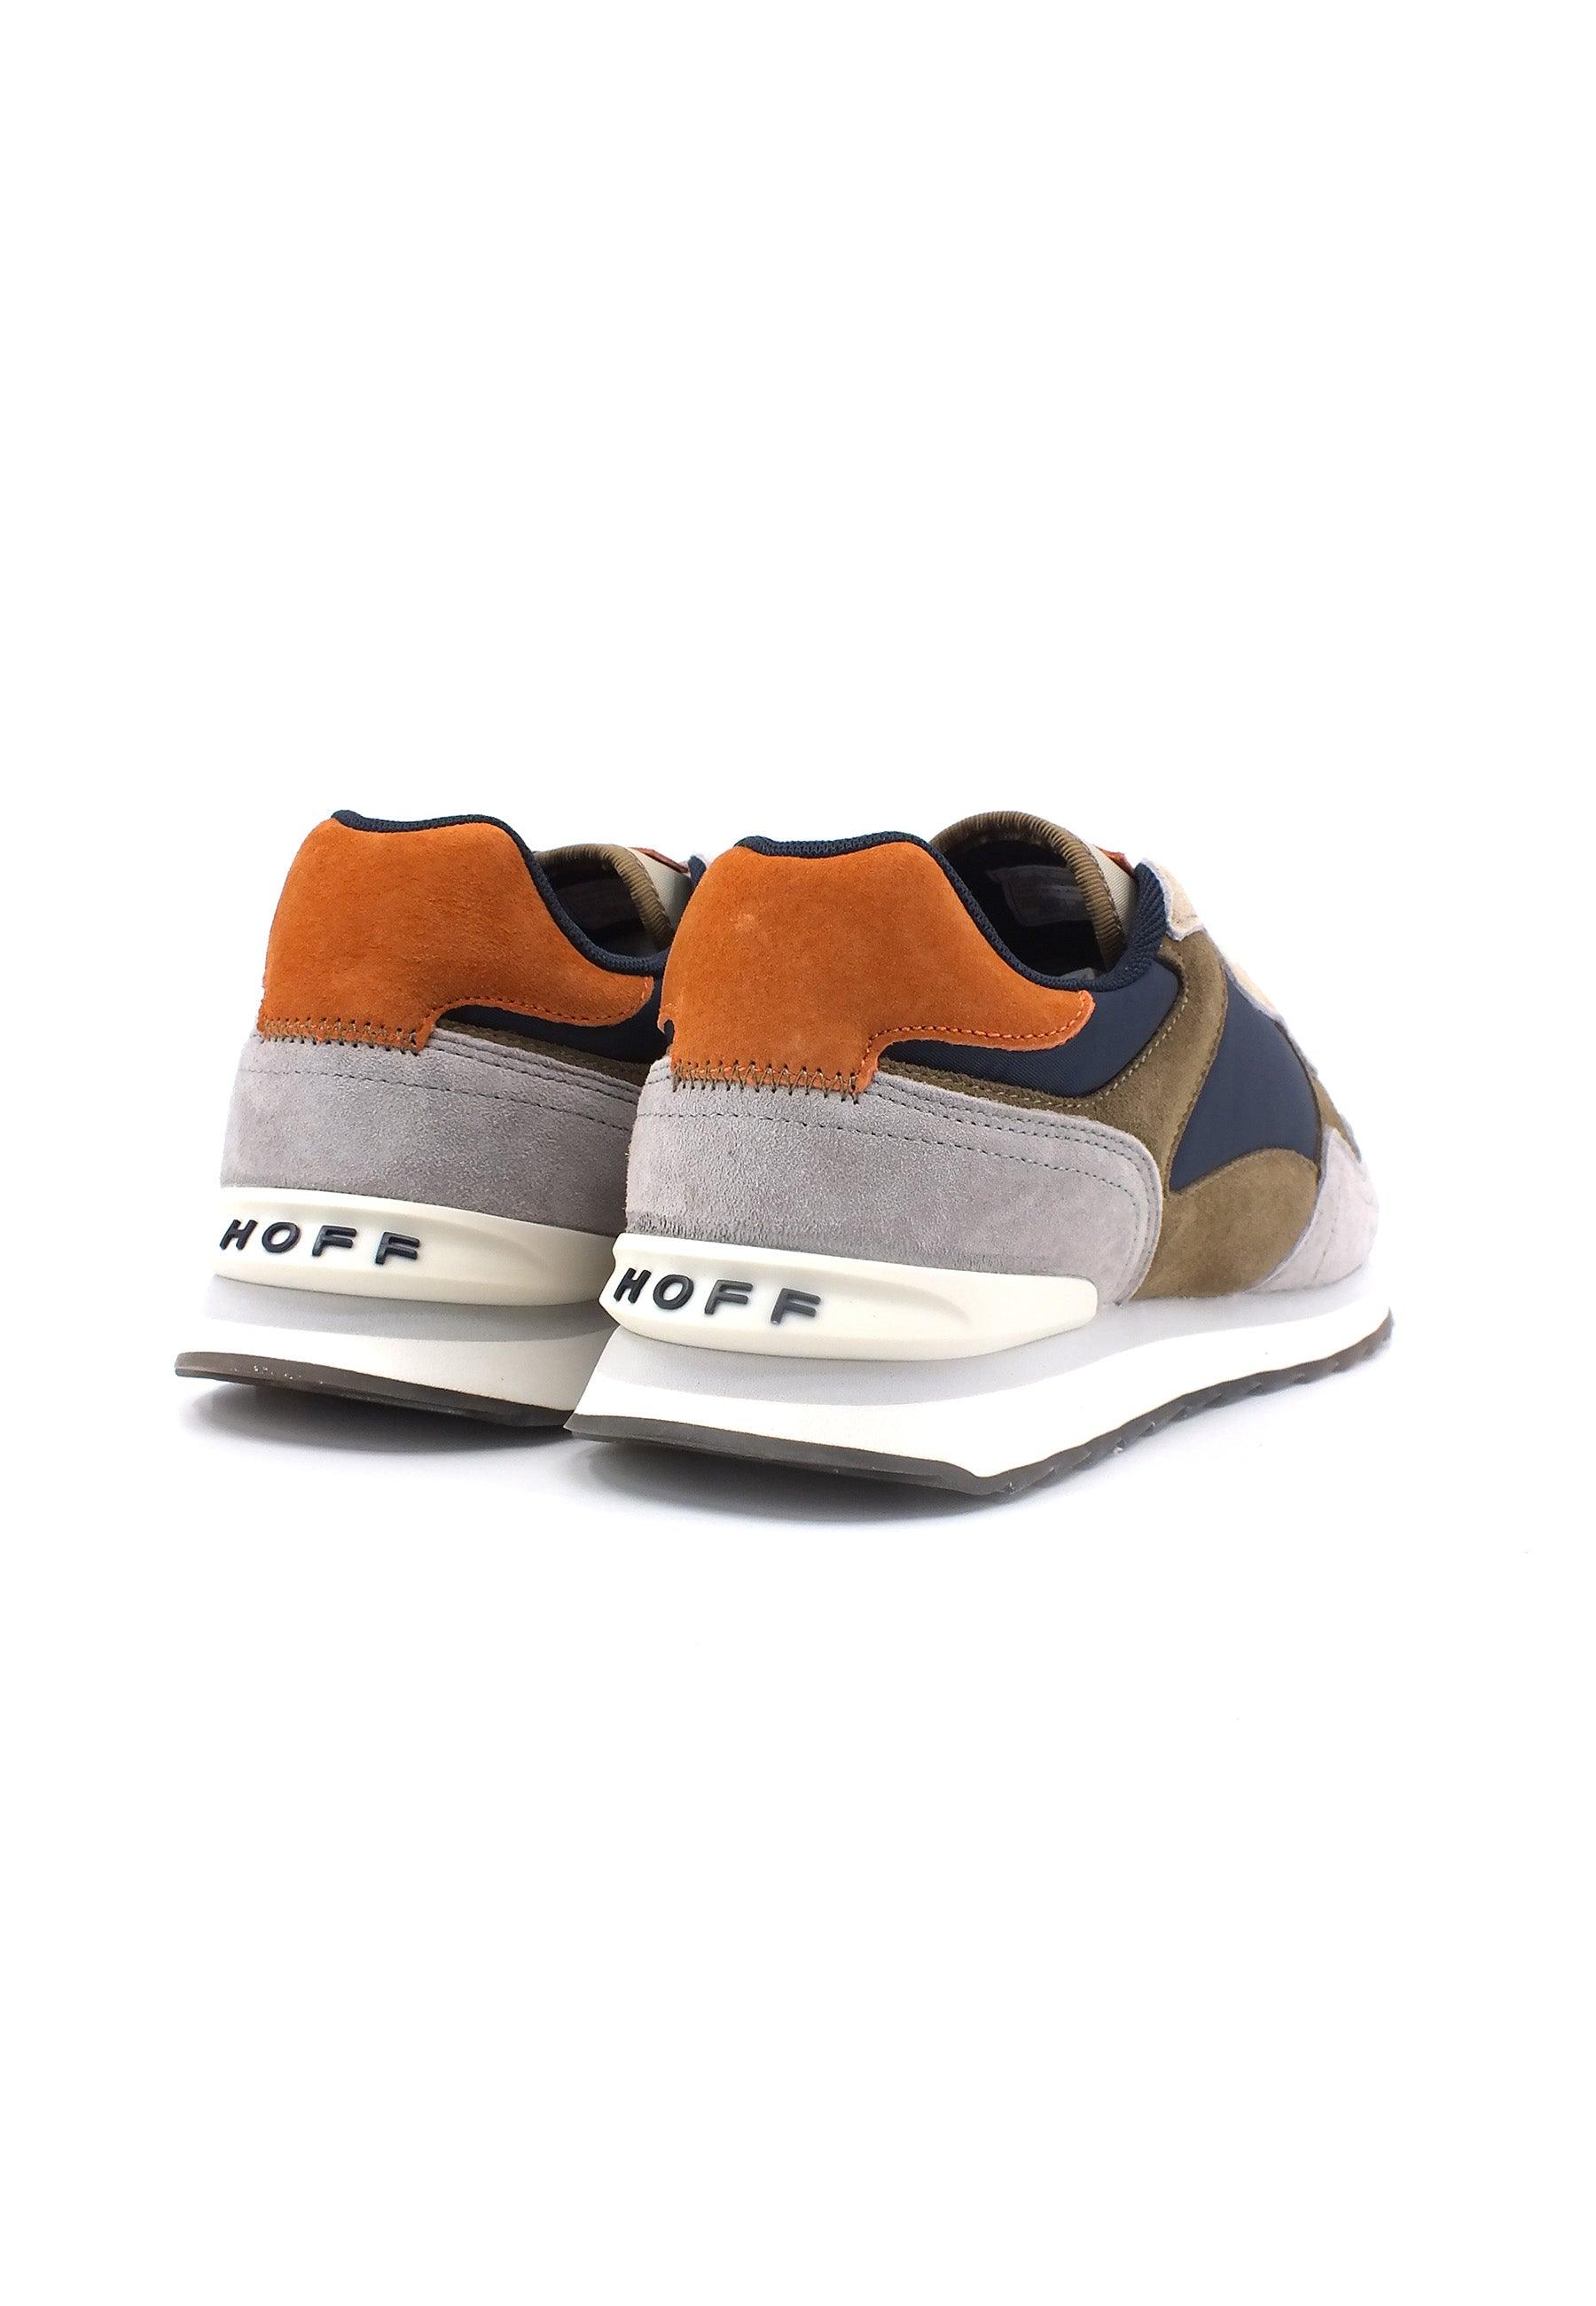 HOFF Biarritz Sneaker Uomo Taupe Navy Grey 22302605 - Sandrini Calzature e Abbigliamento